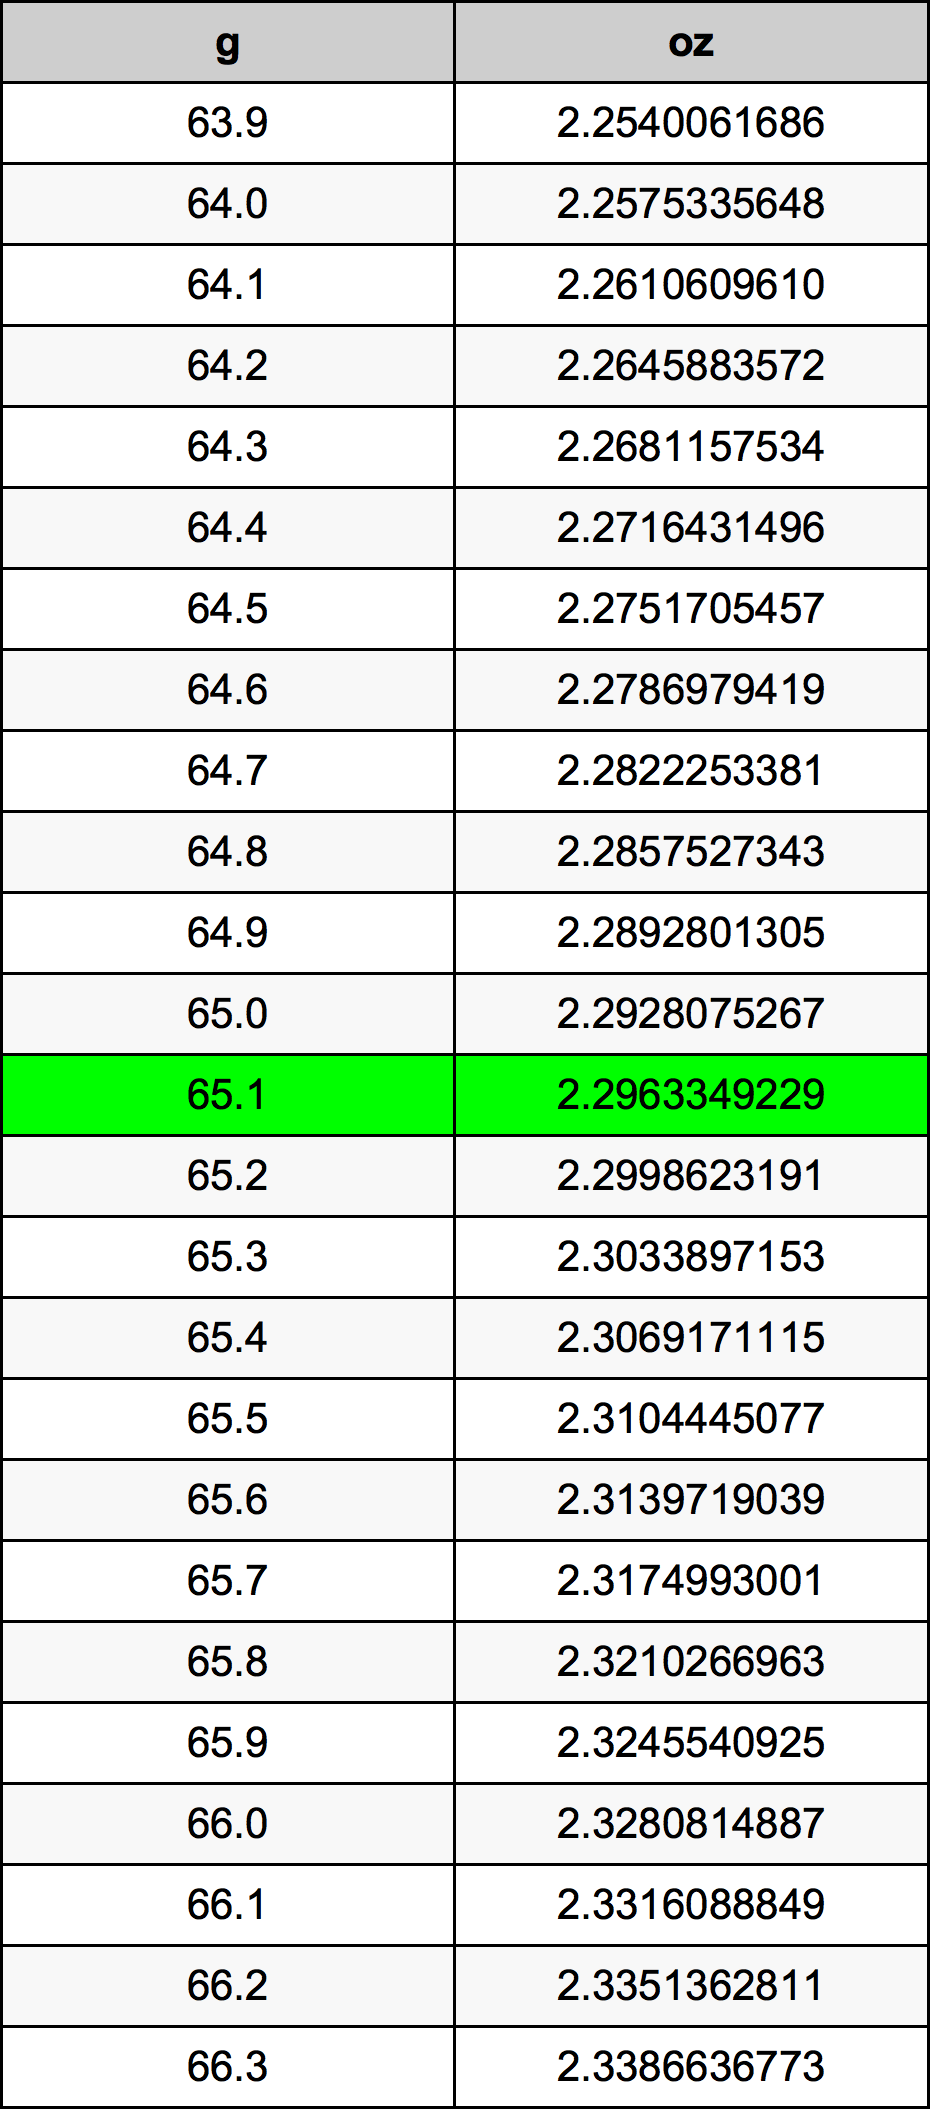 65.1 غرام جدول تحويل